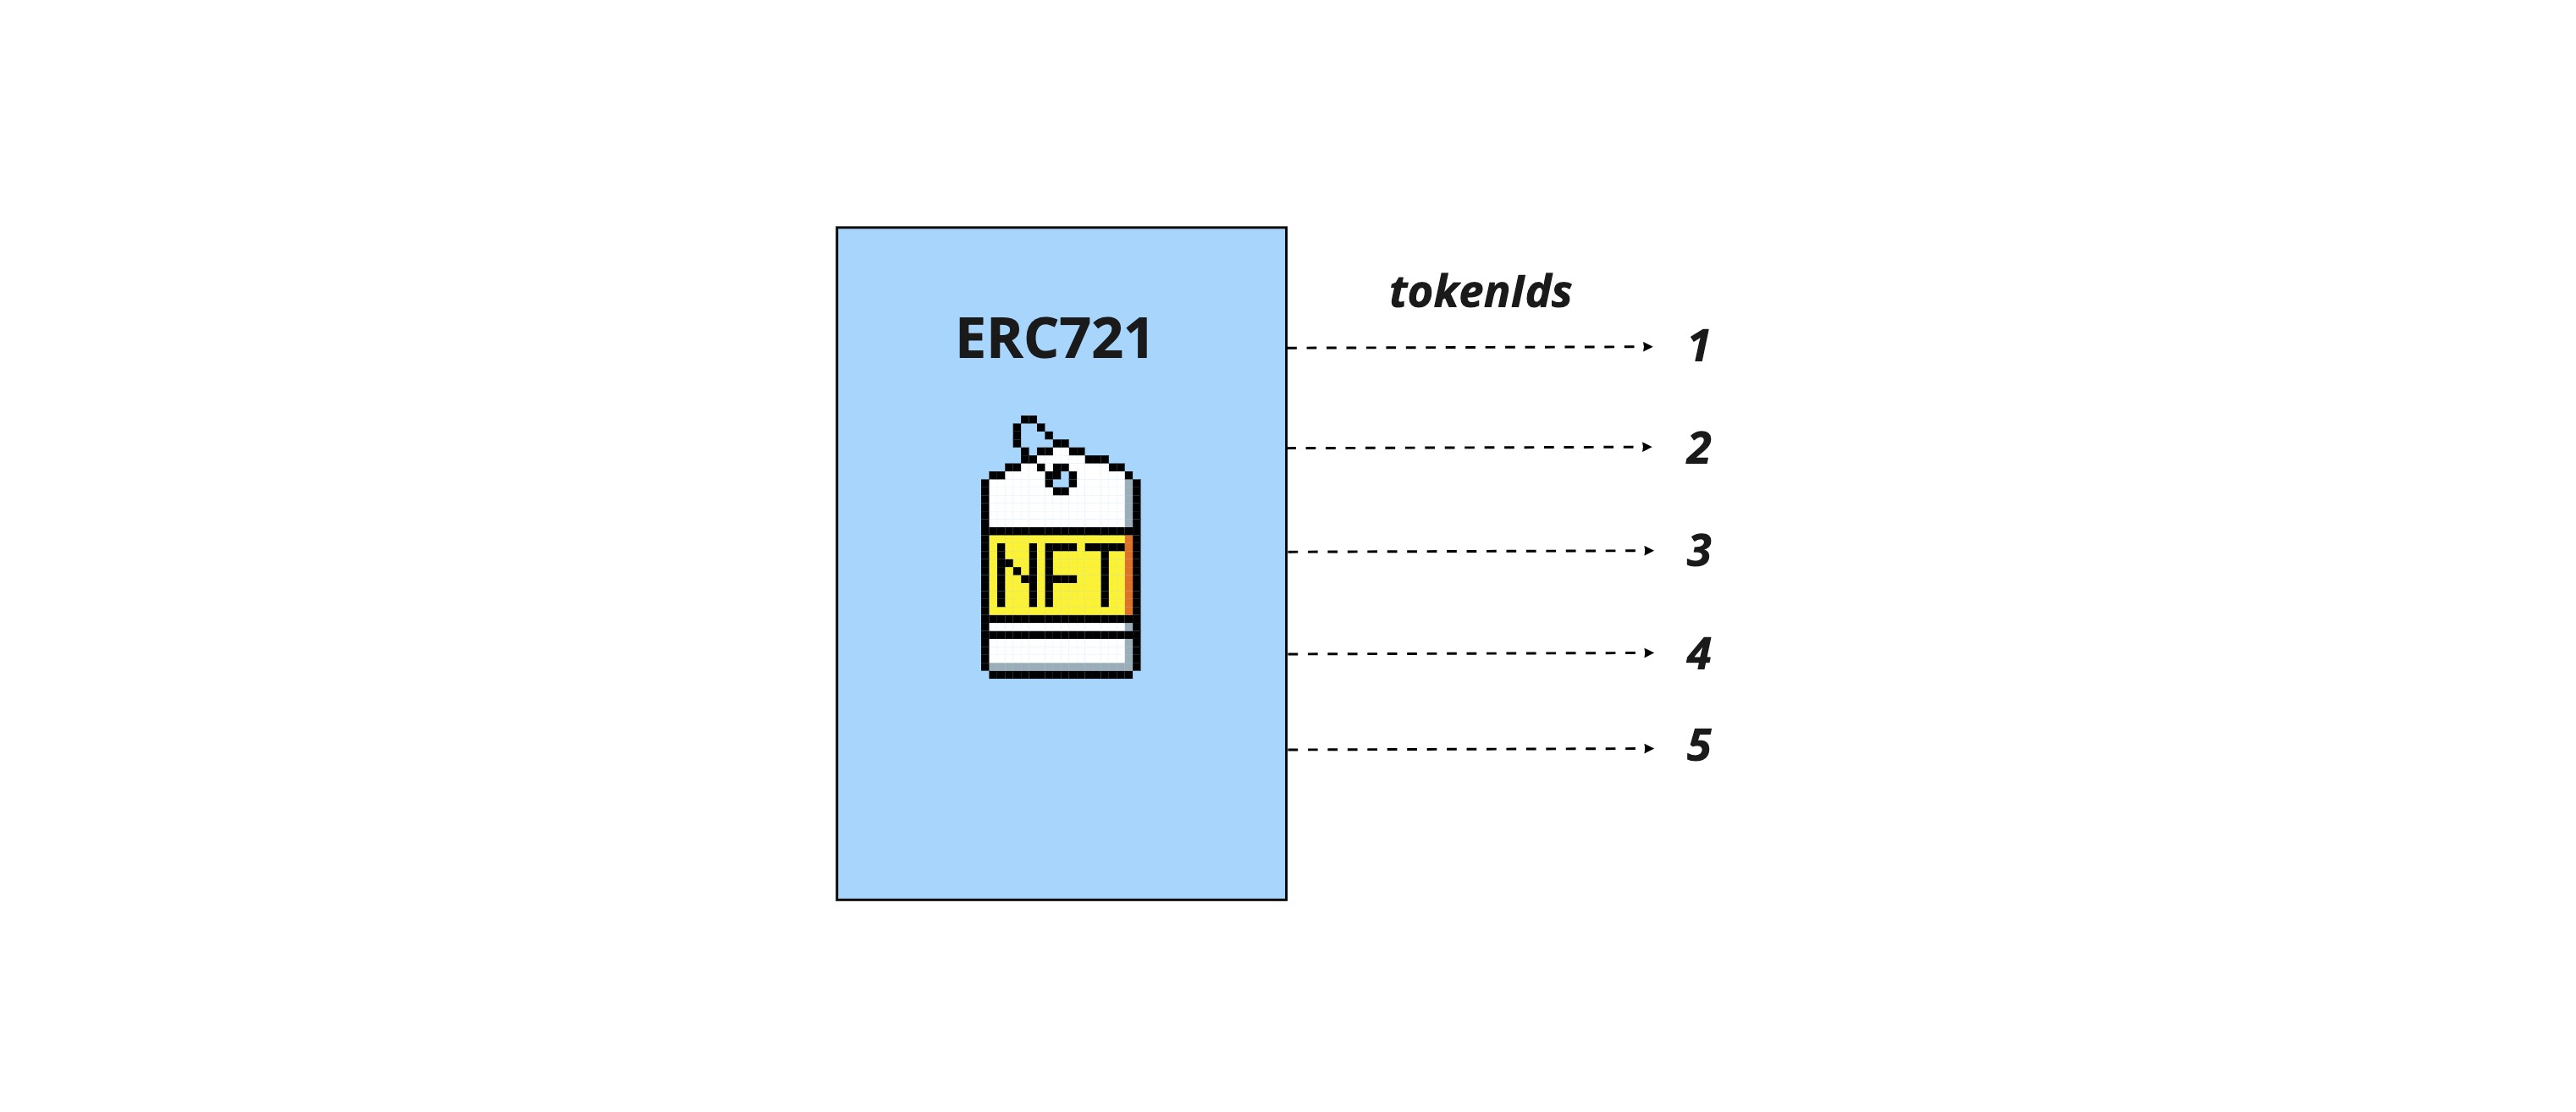 ERC721 TokenIds Representation